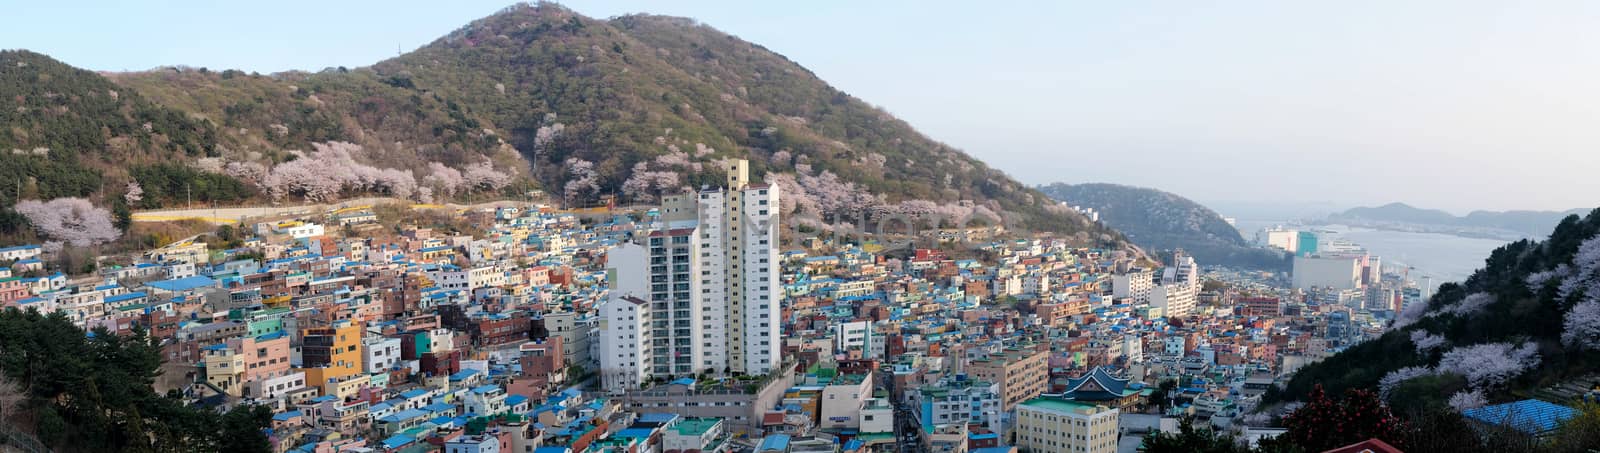 View of Gamcheon Culture Village, Busan, South Korea. by Surasak